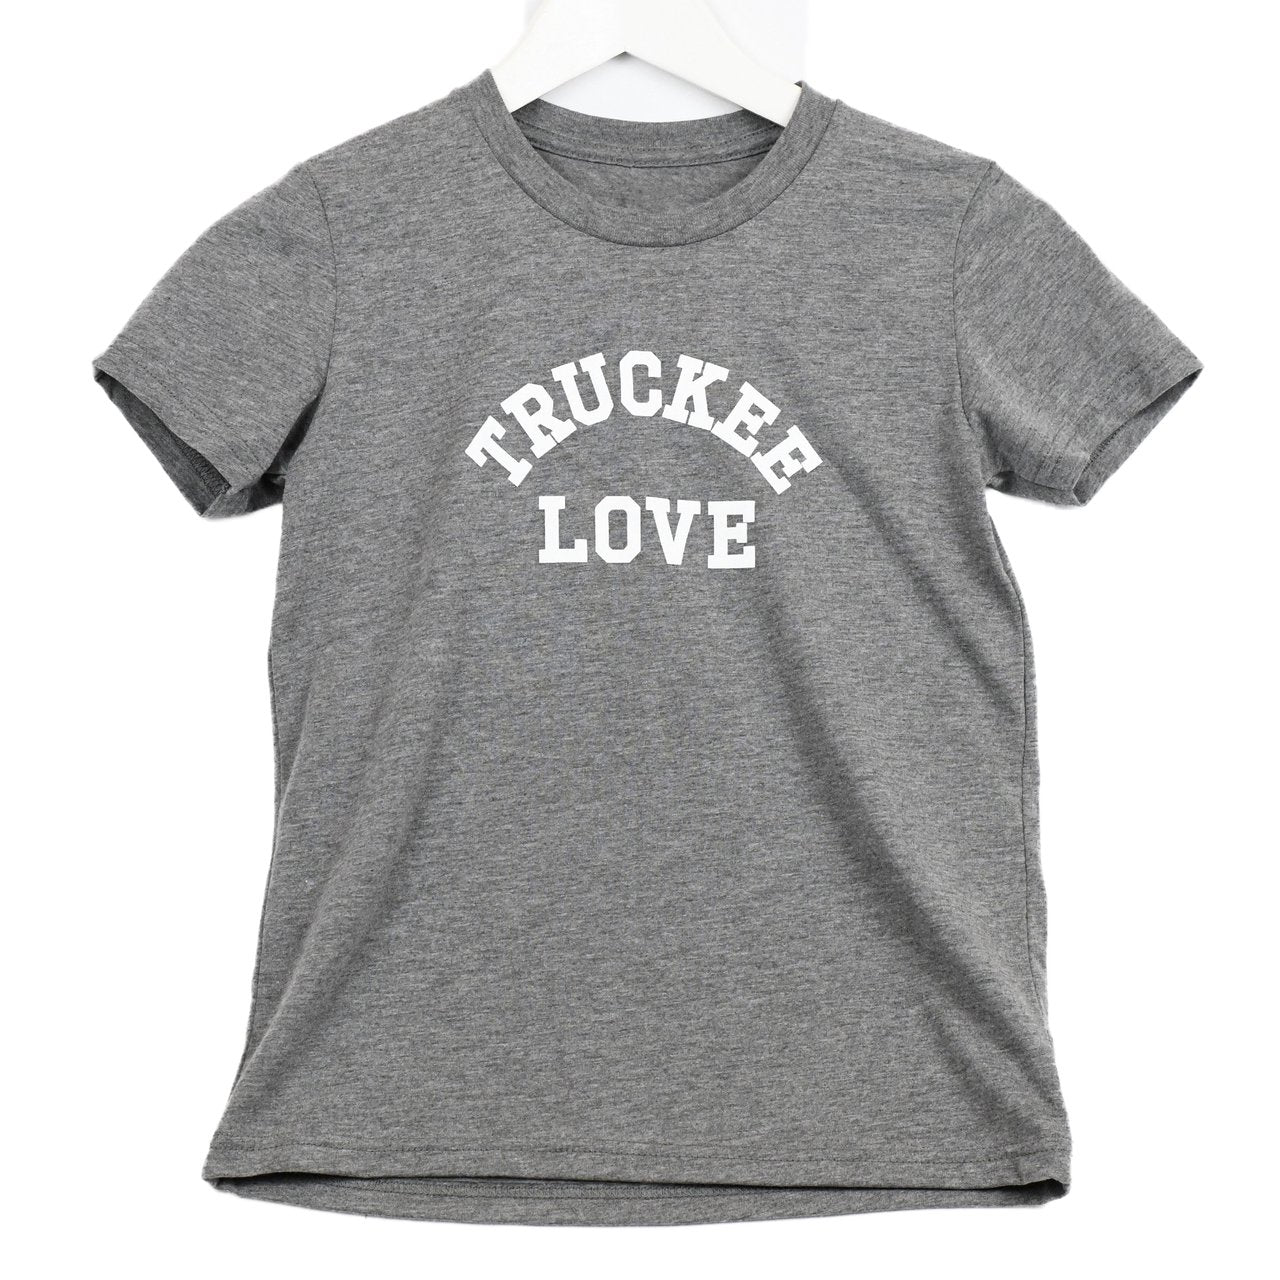 Truckee Love T-Shirt - Charcoal